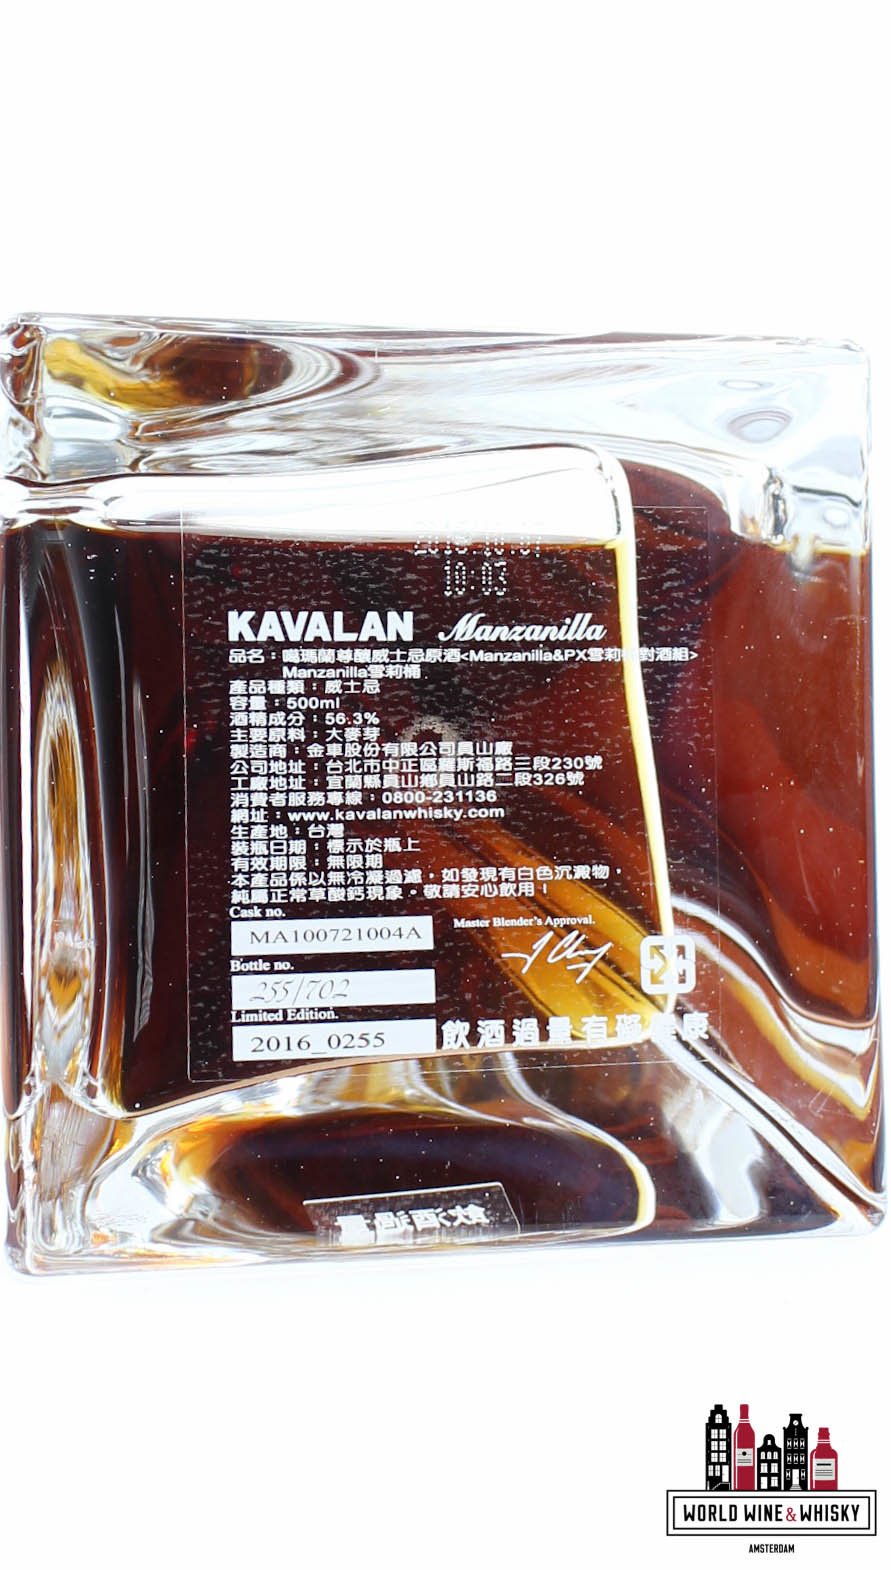 Kavalan Kavalan Decanter Set - Pedro Ximenez & Manzanilla Sherry Cask - Limited Edition 2016_0255 56.3% (1 of 702 sets)